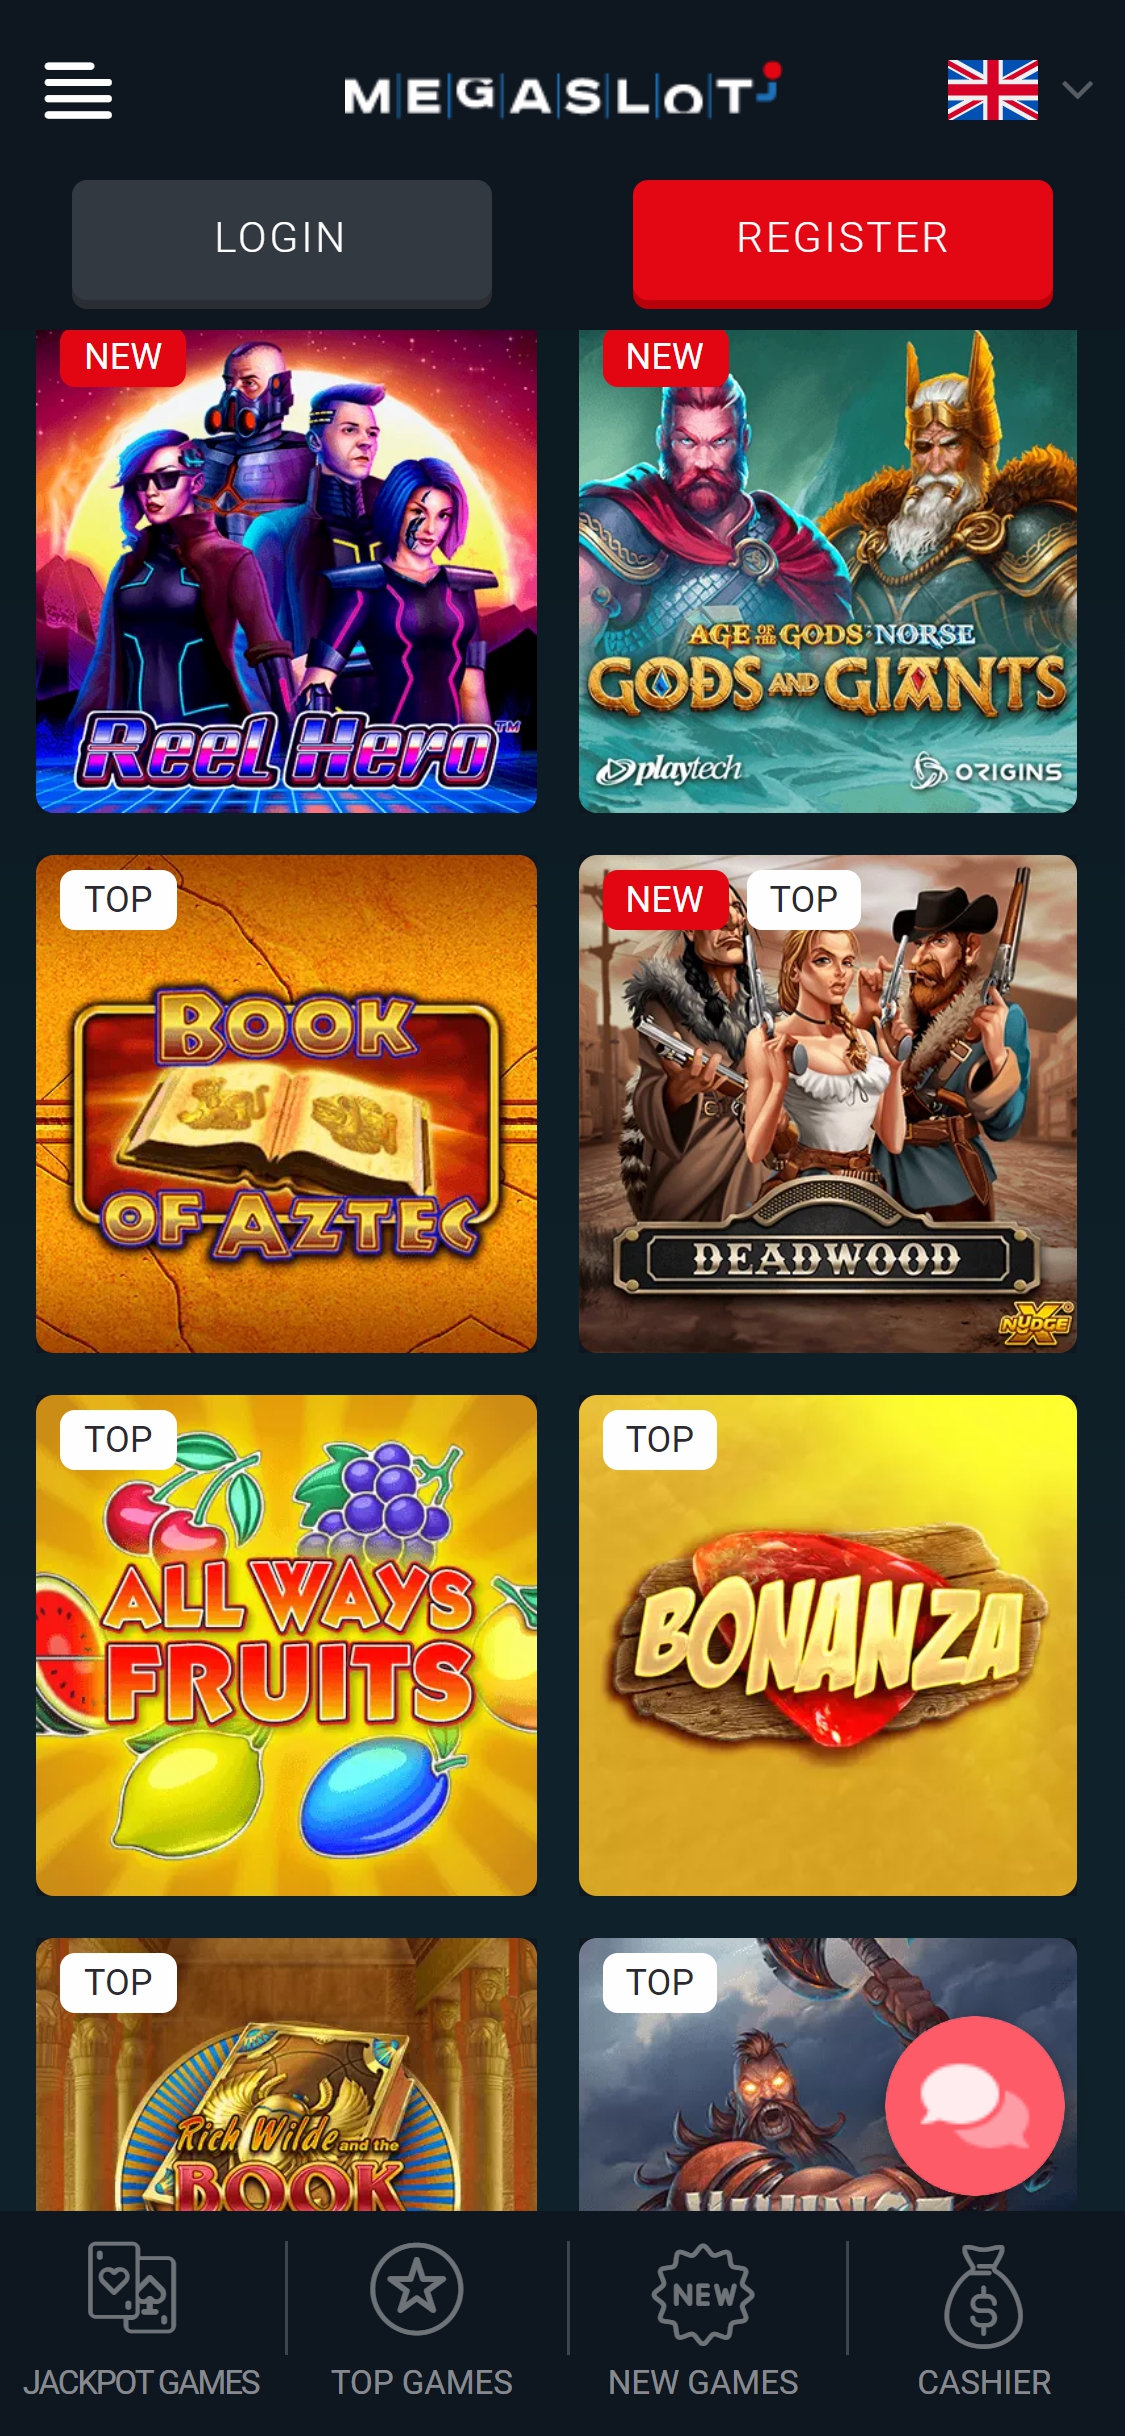 Megaslot Casino Mobile Games Review